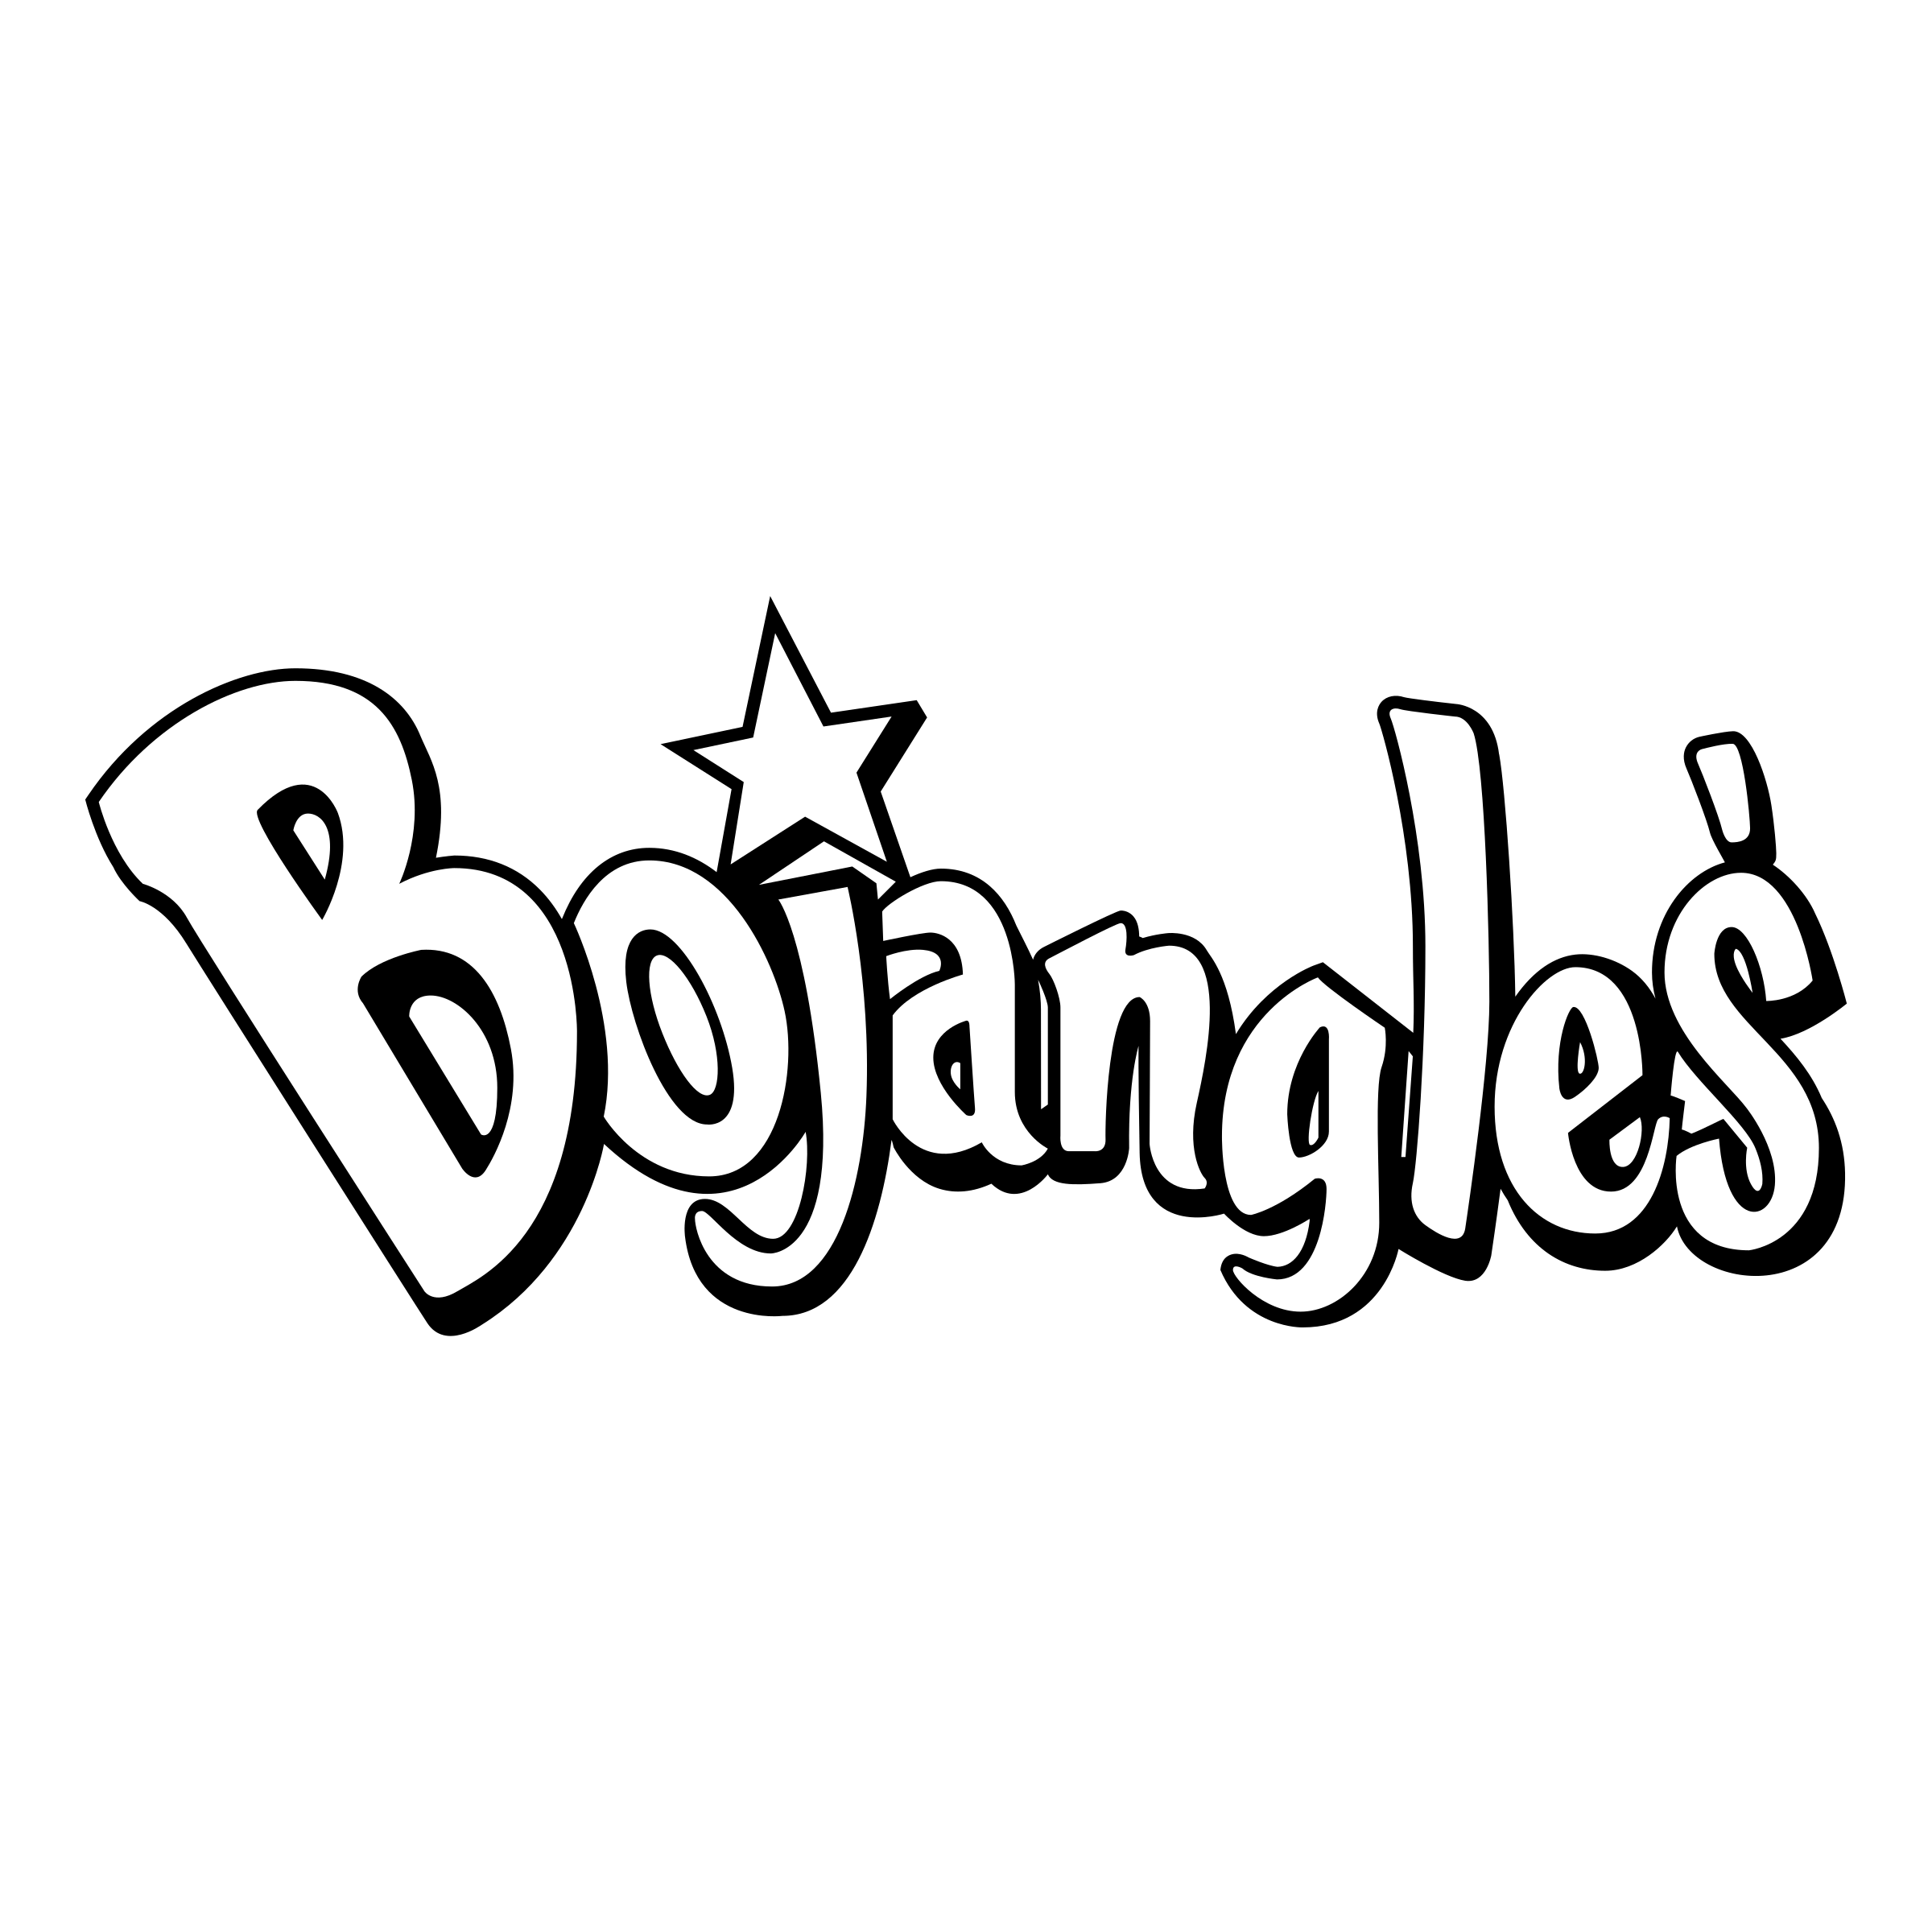 Bojangles Logo - Bojangles 01 Logo PNG Transparent & SVG Vector - Freebie Supply